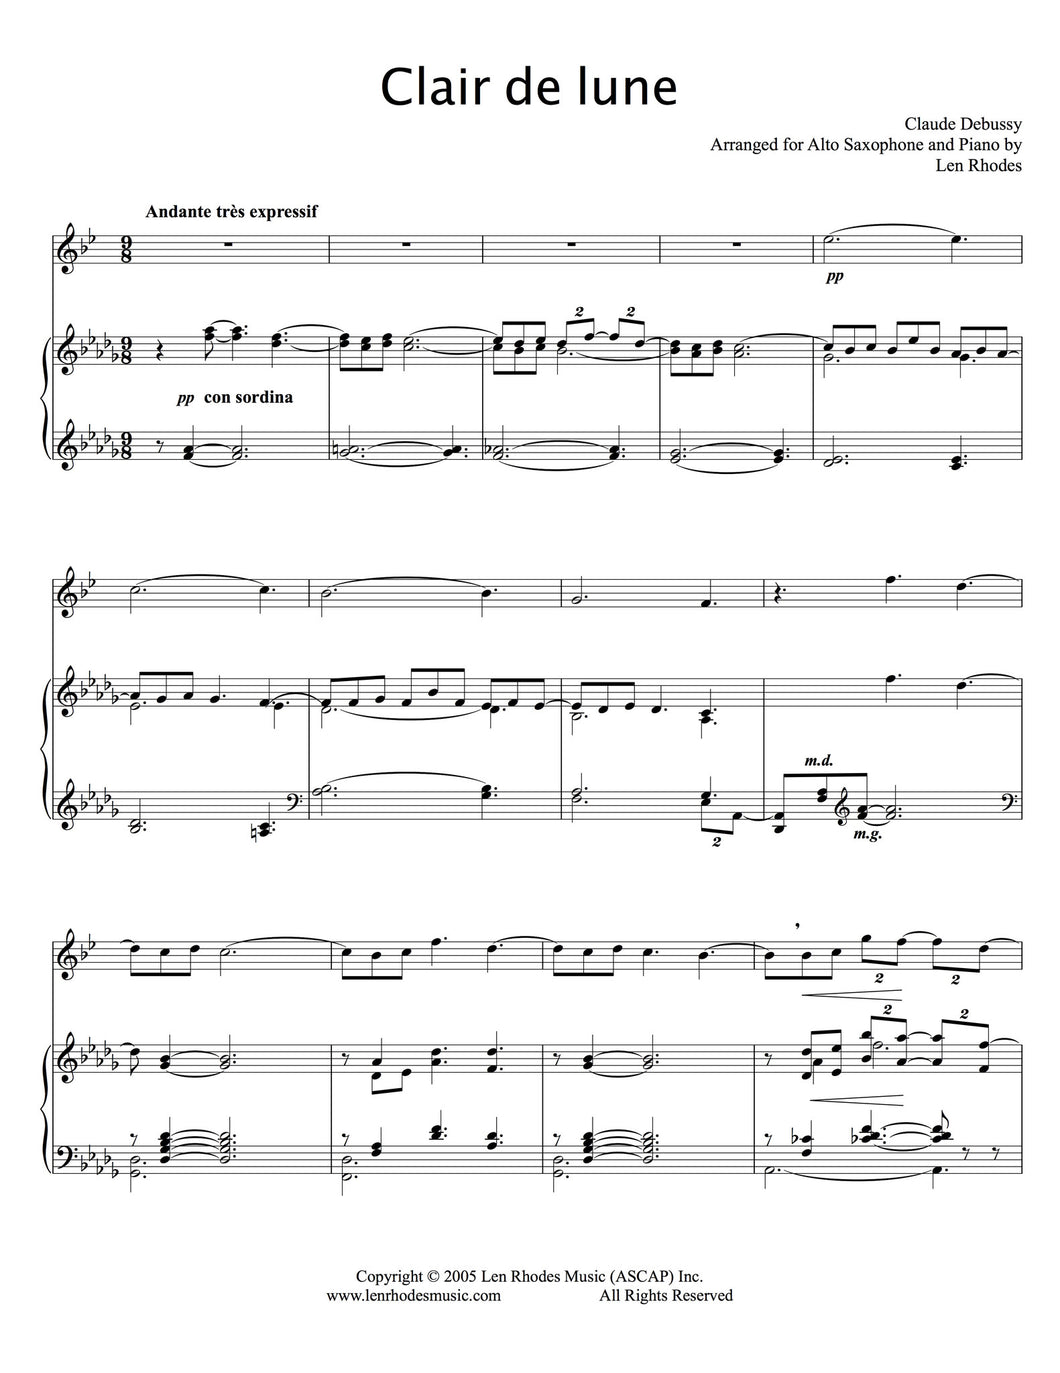 Clair de lune, Debussy - Alto Saxophone and Piano